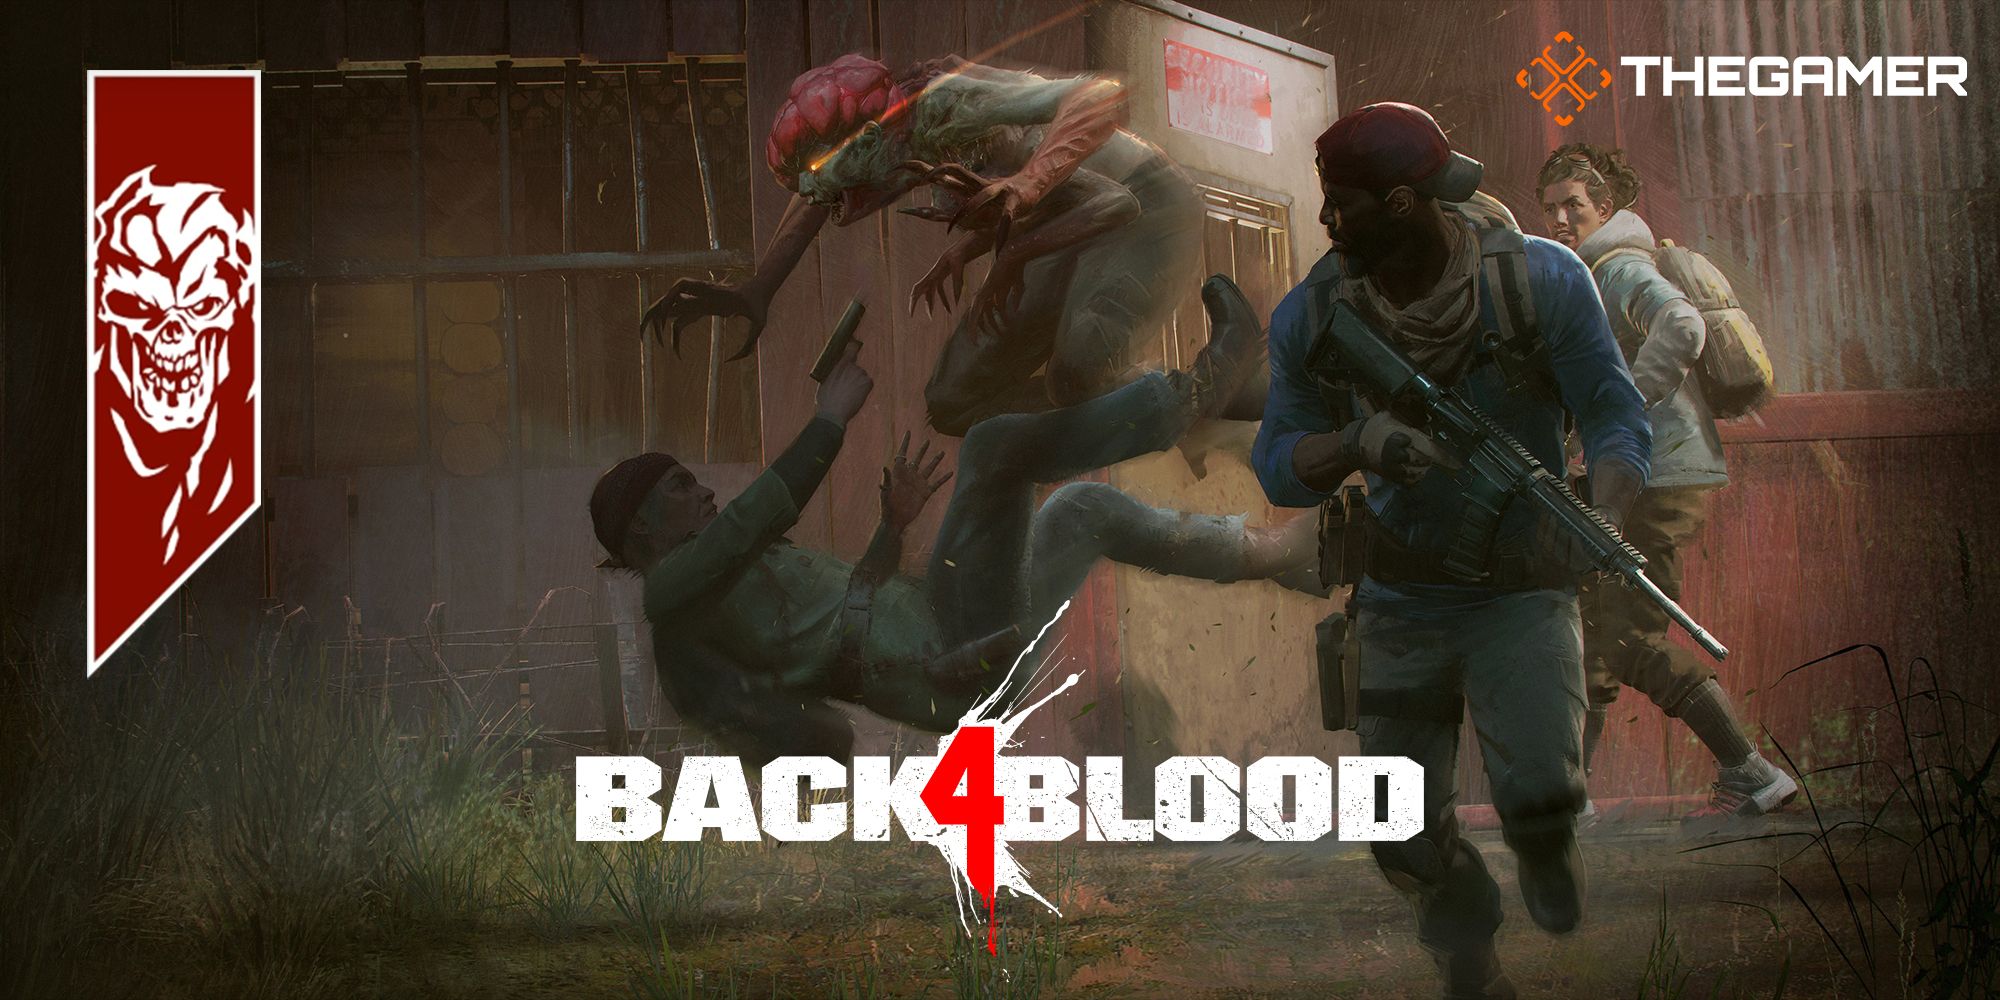 Does Back 4 Blood have cross progression? - Gamepur